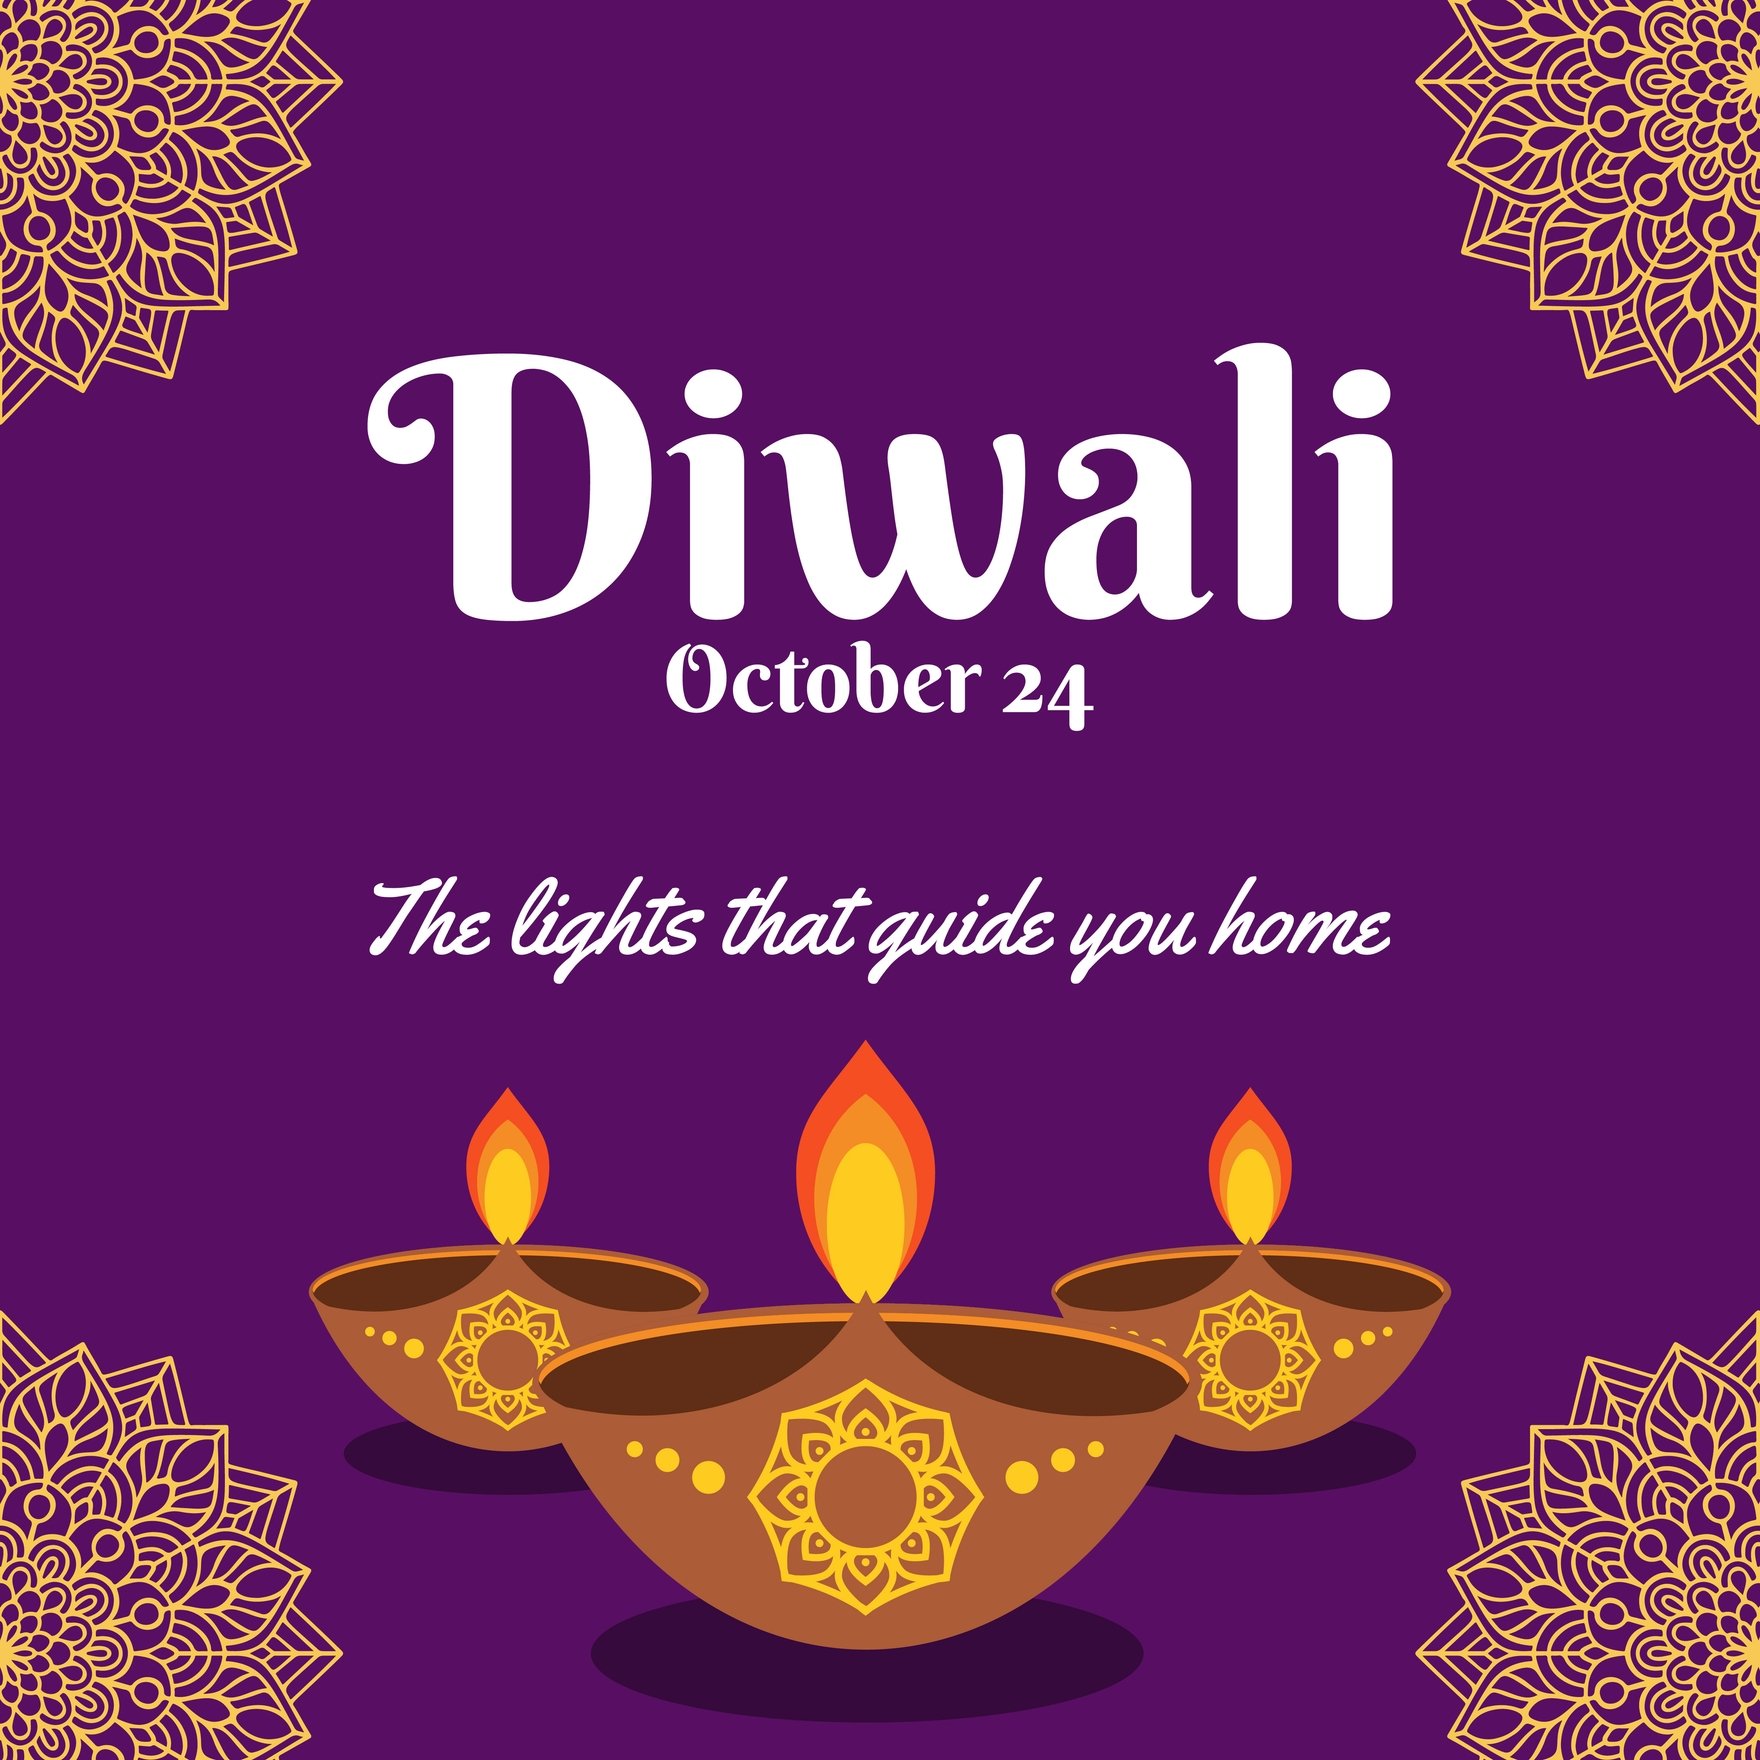 Free Diwali Instagram Post in Illustrator, PSD, EPS, SVG, JPG, PNG